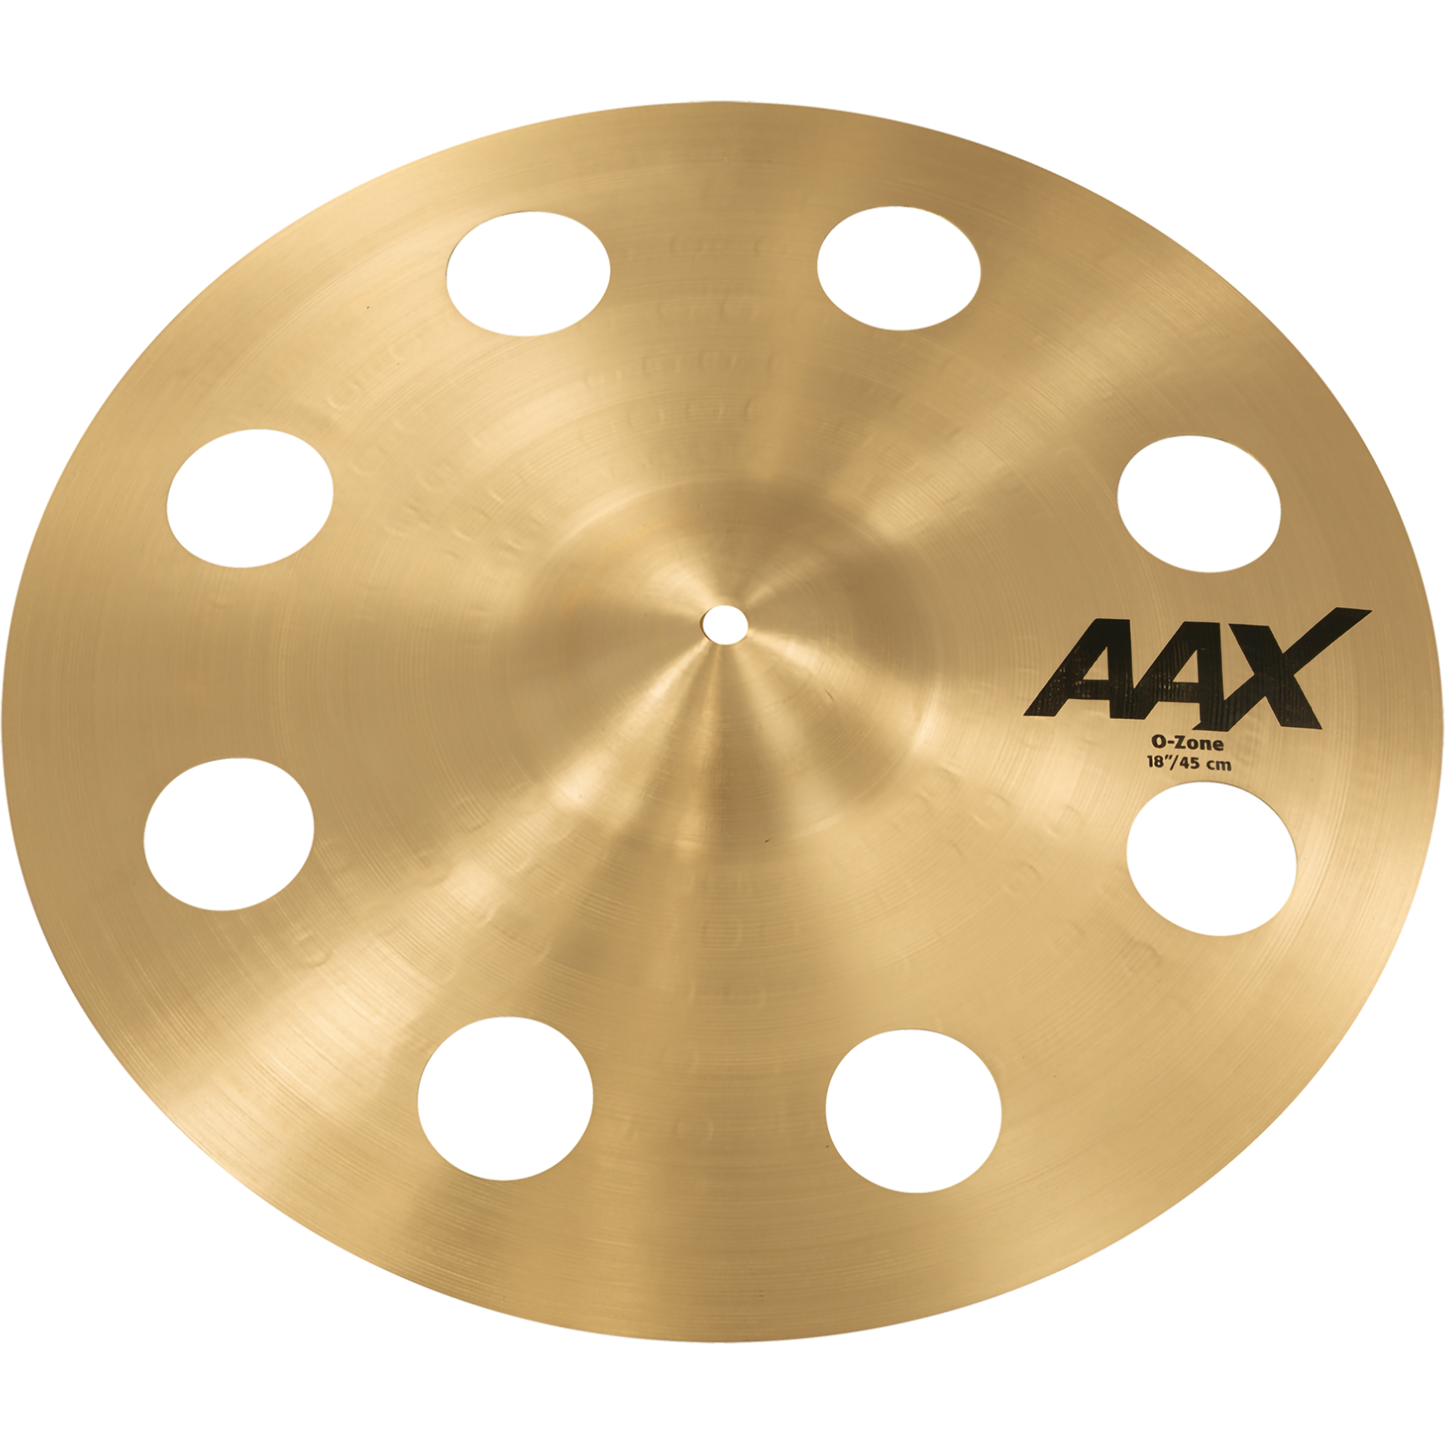 Sabian AAX Series 18” Ozone Crash Cymbal